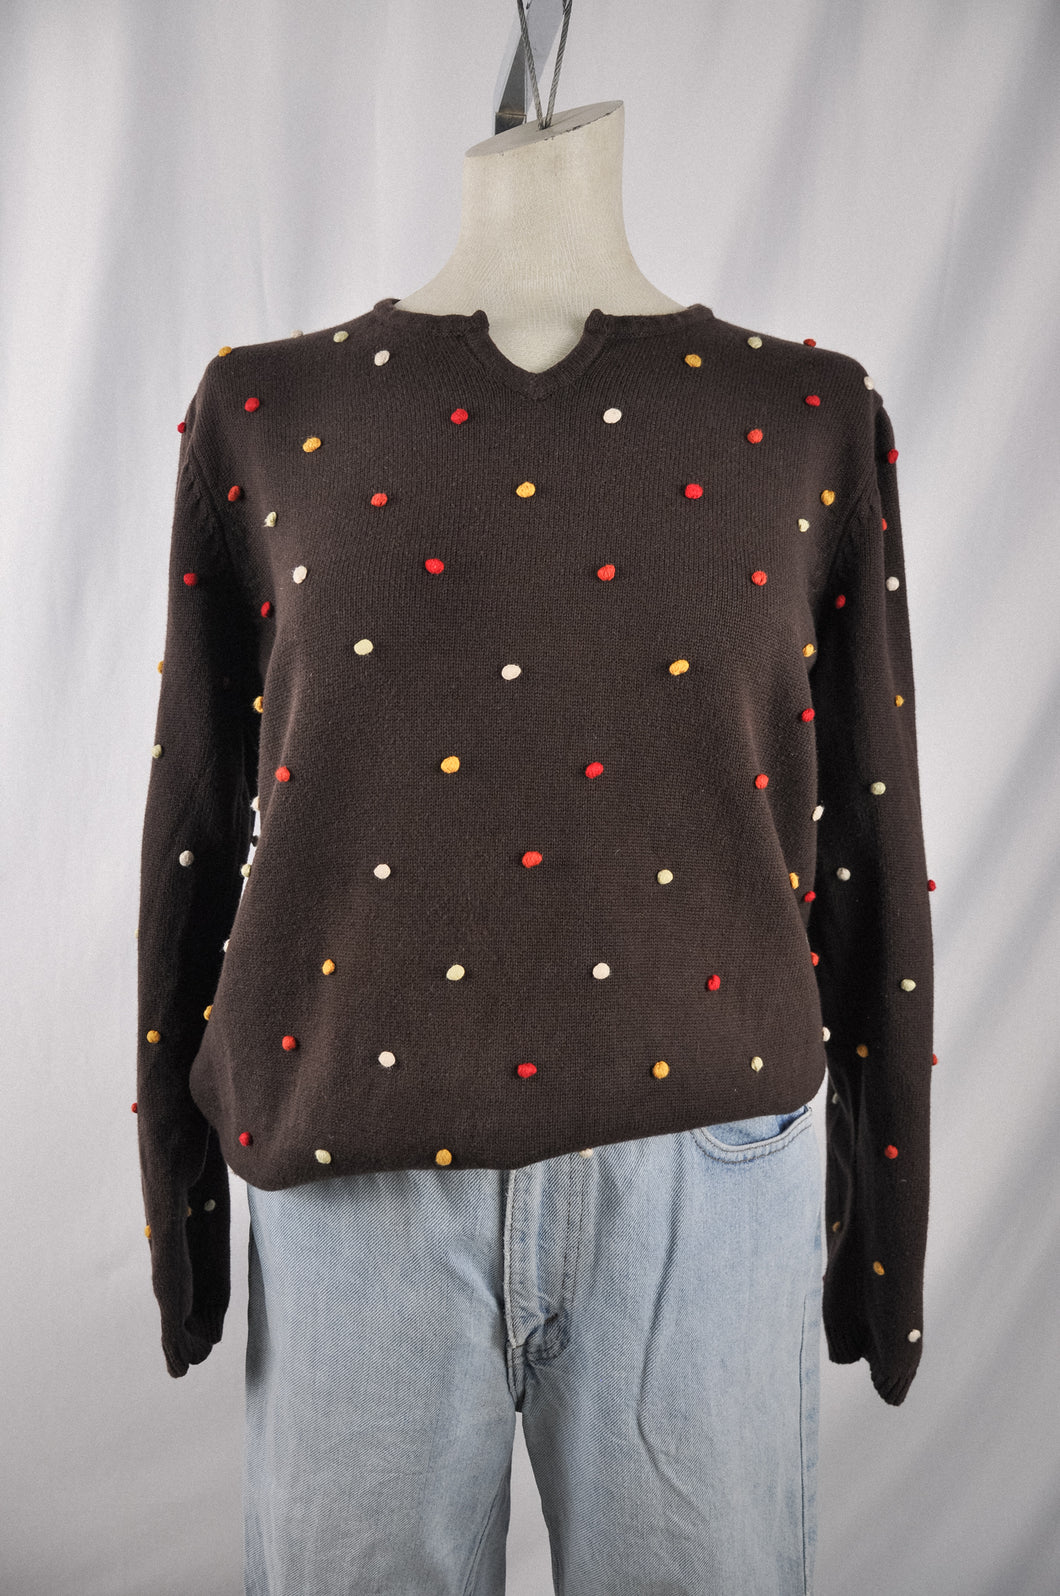 Tulchan Cotton Sweater | Size L